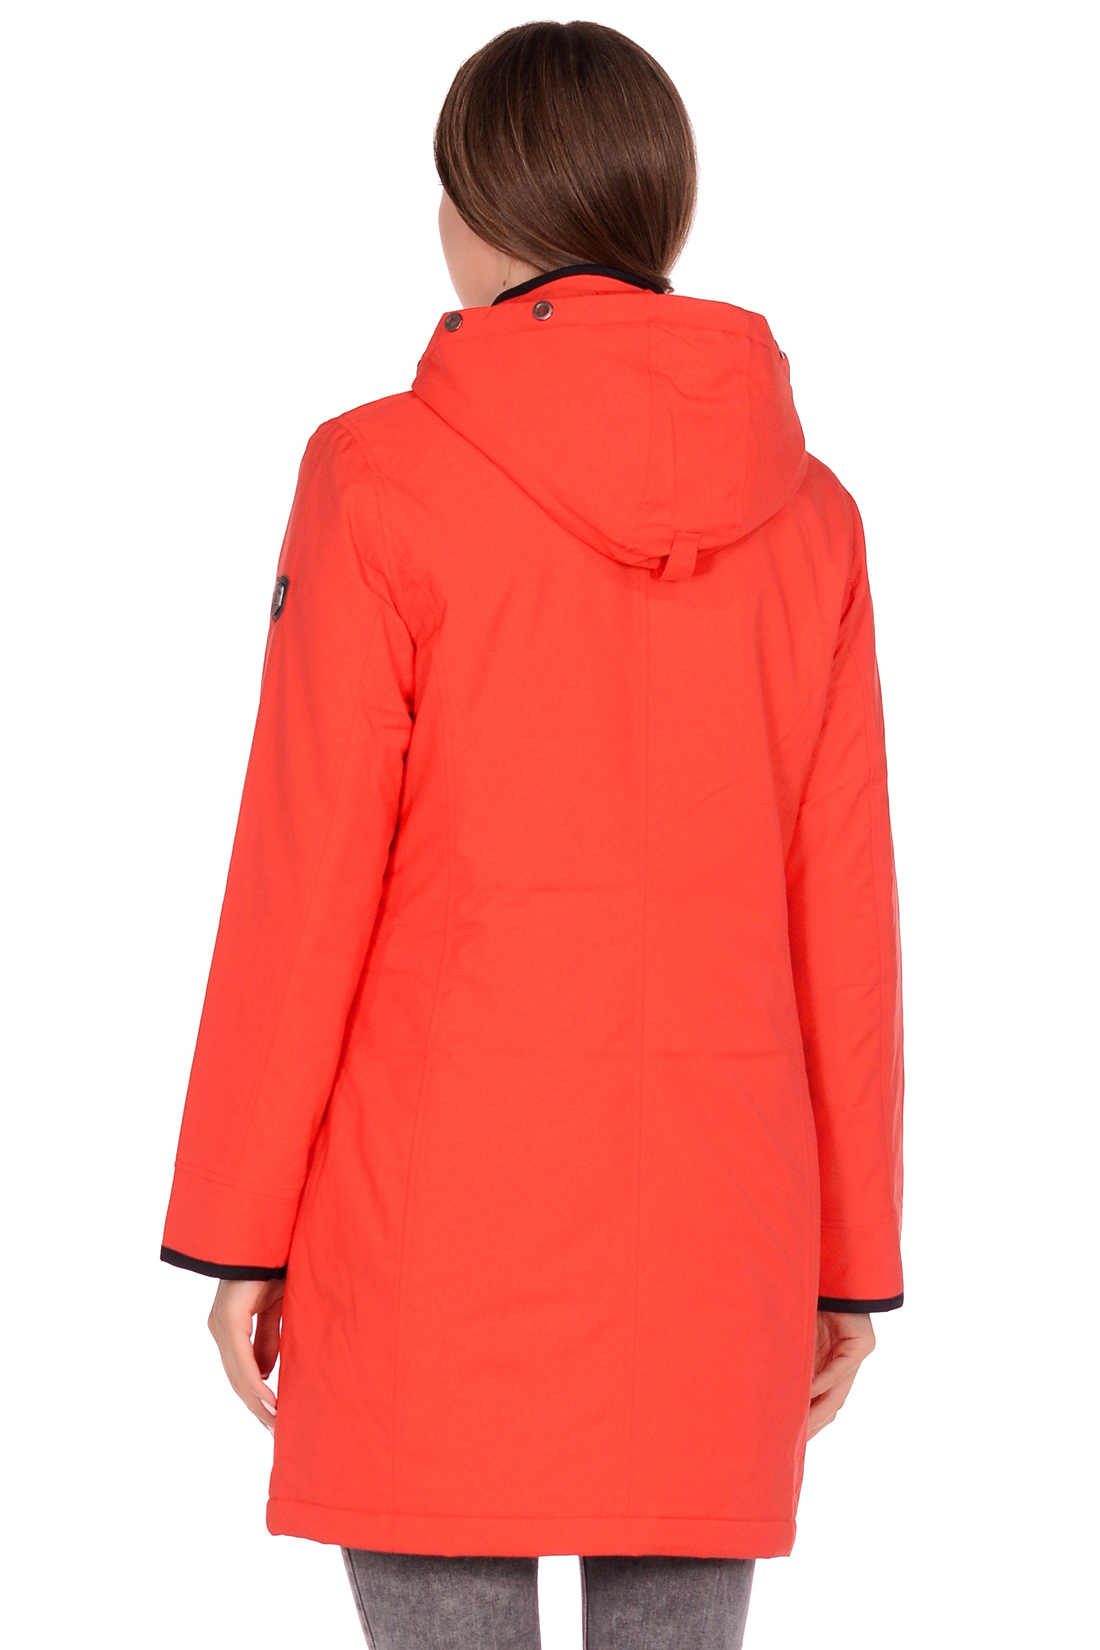 Куртка со стёганой подкладкой (арт. baon B038532), размер XXL, цвет красный Куртка со стёганой подкладкой (арт. baon B038532) - фото 5